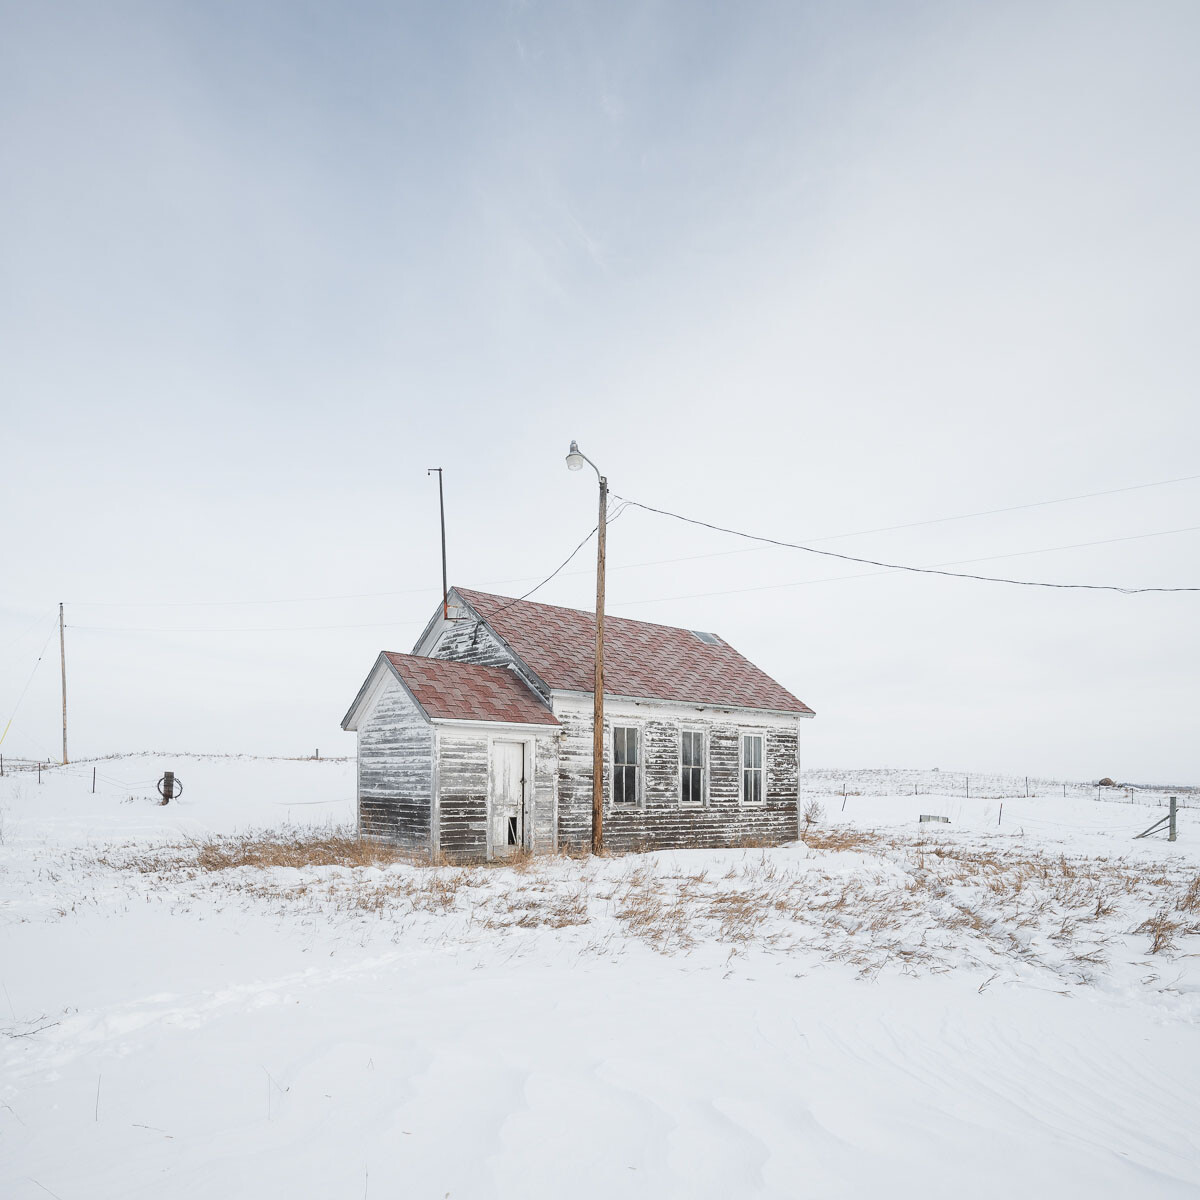 1 место в категории Архитектура, 2021. Зима в Северной Дакоте. Город-призрак Арена, Северная Дакота. Автор Сандра Хербер